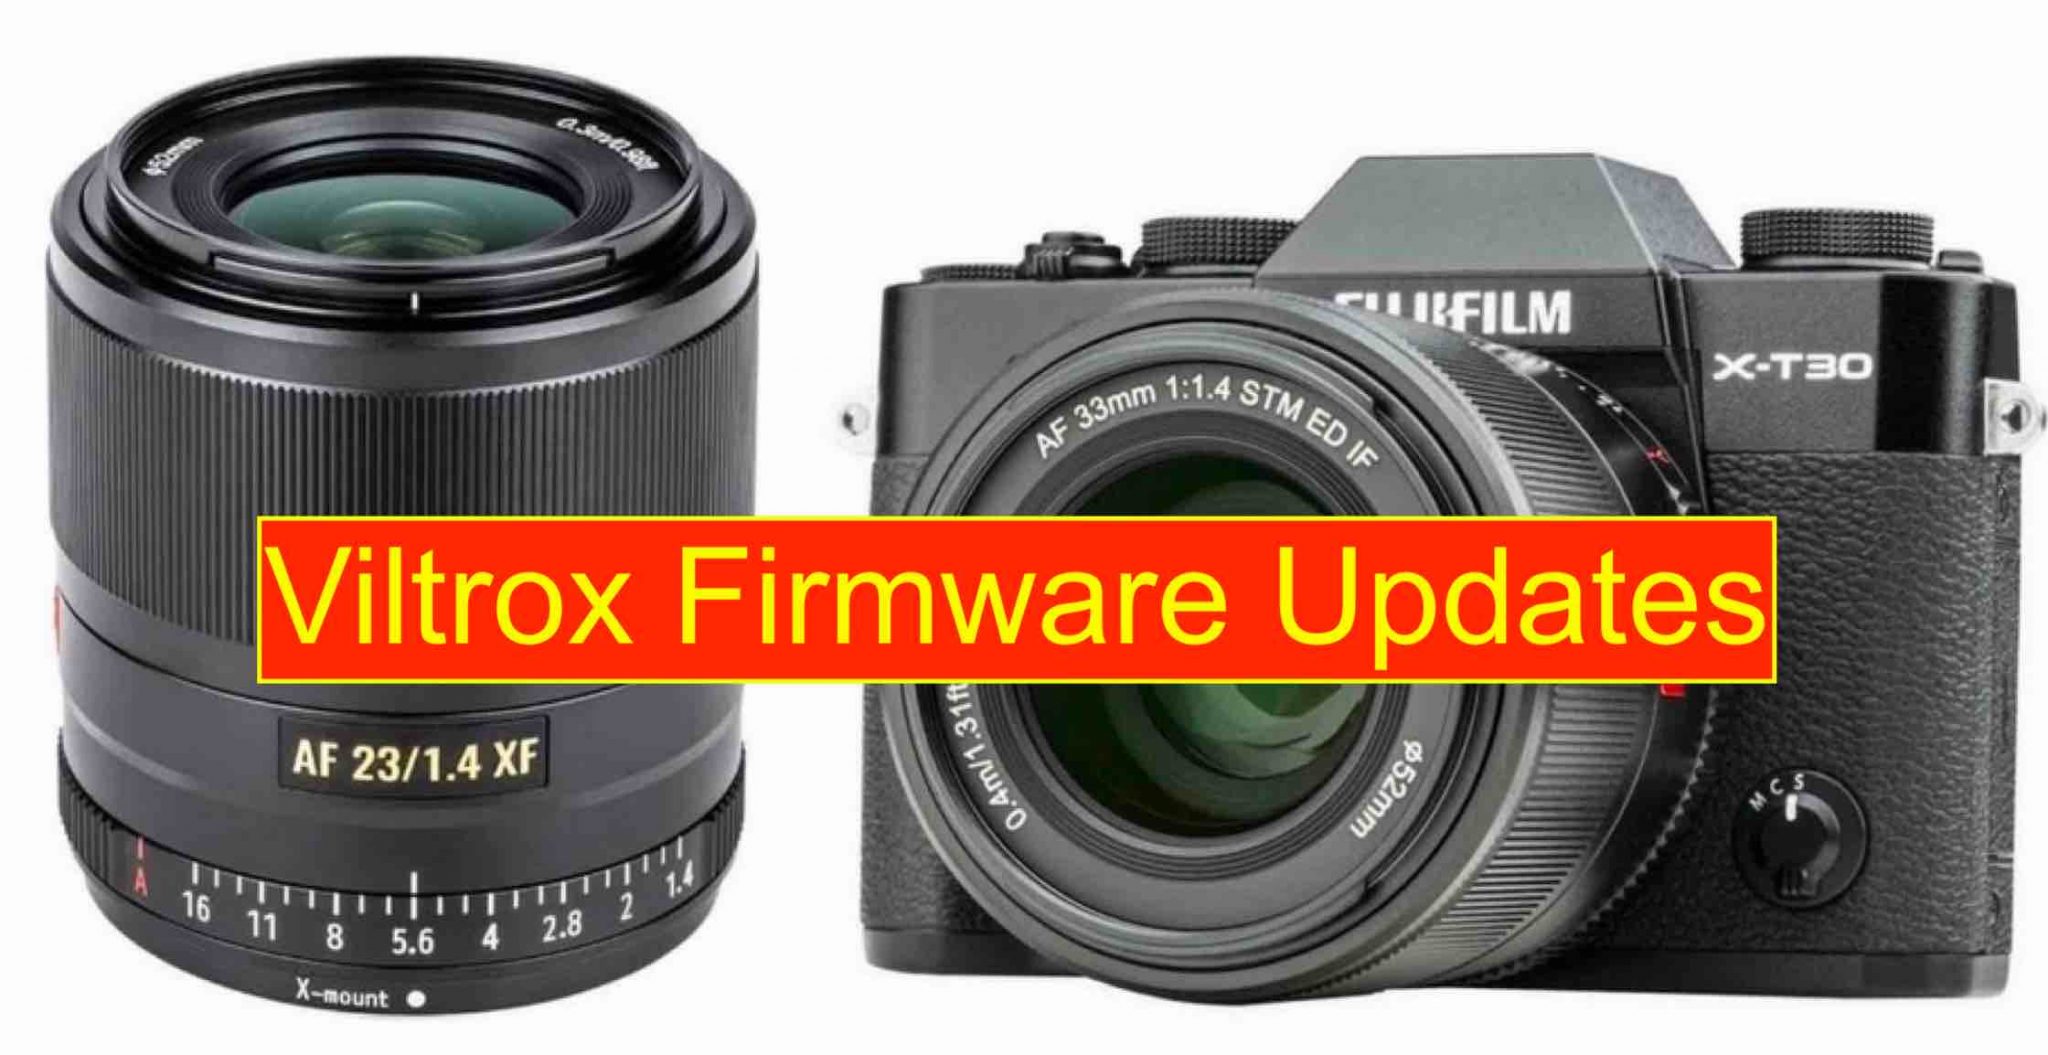 Viltrox 33mmF1.4 and 23mmF1.4 Firmware Updates Released - Fuji Rumors